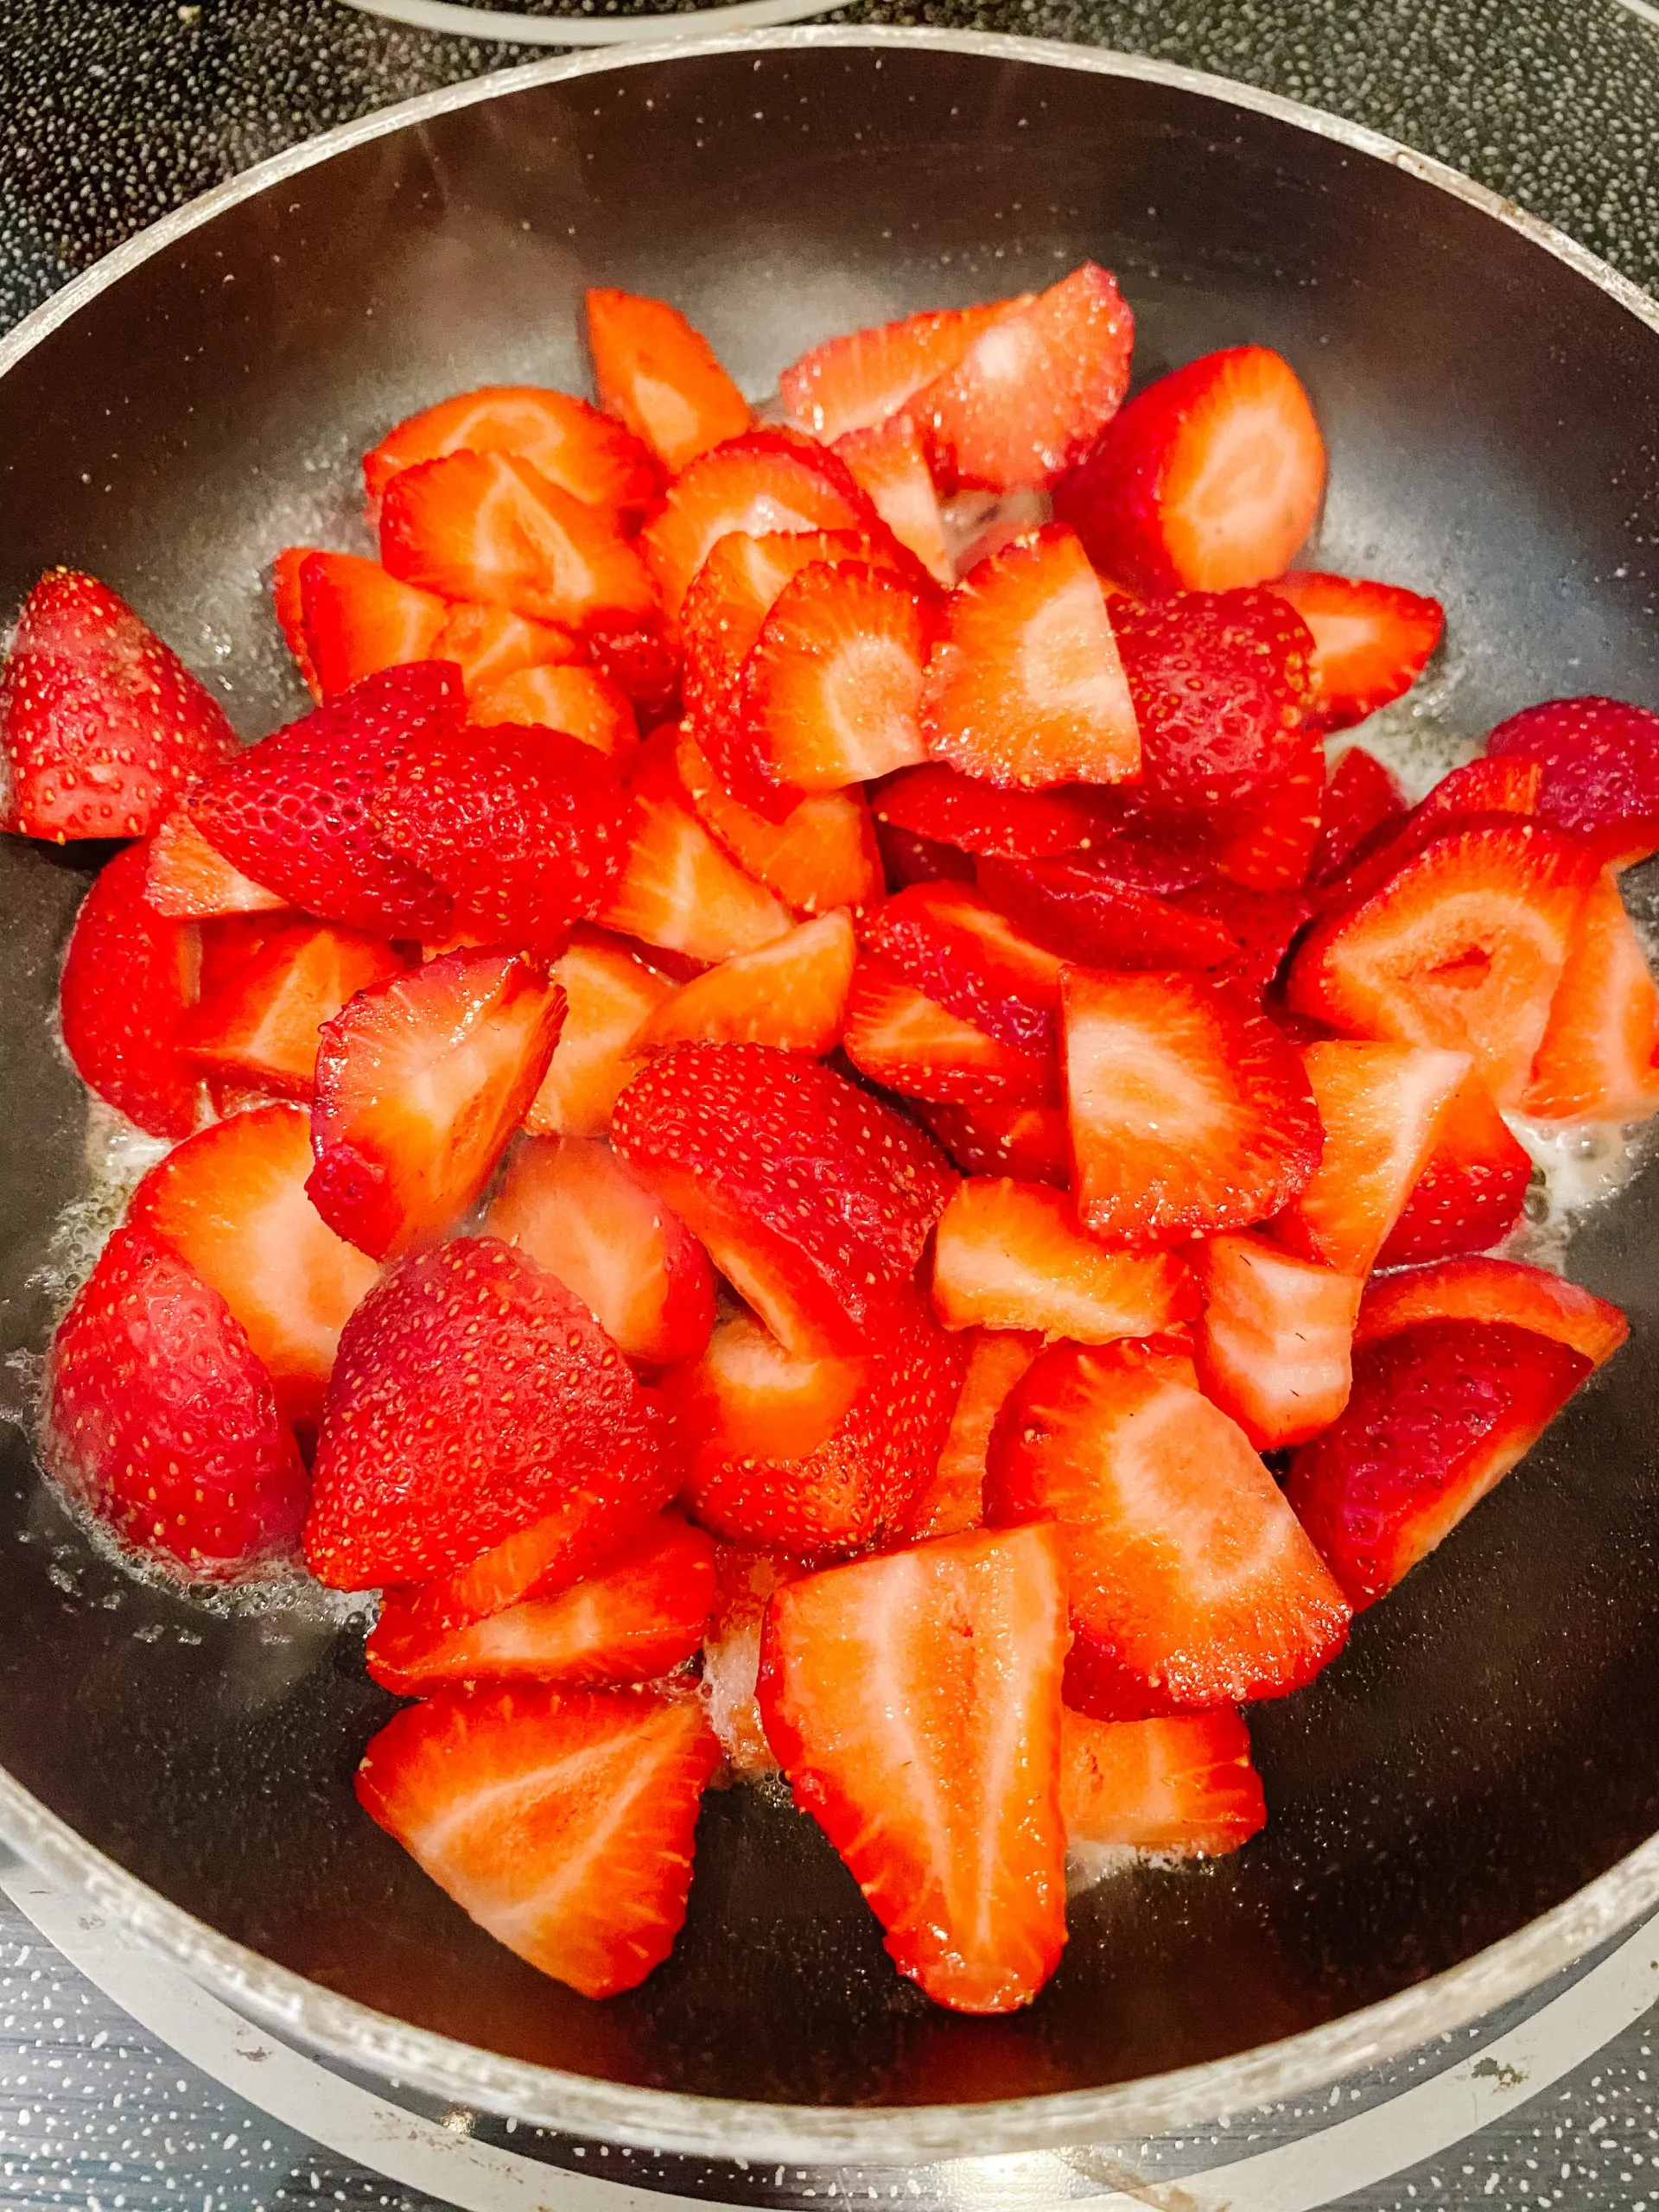 cut up strawberries